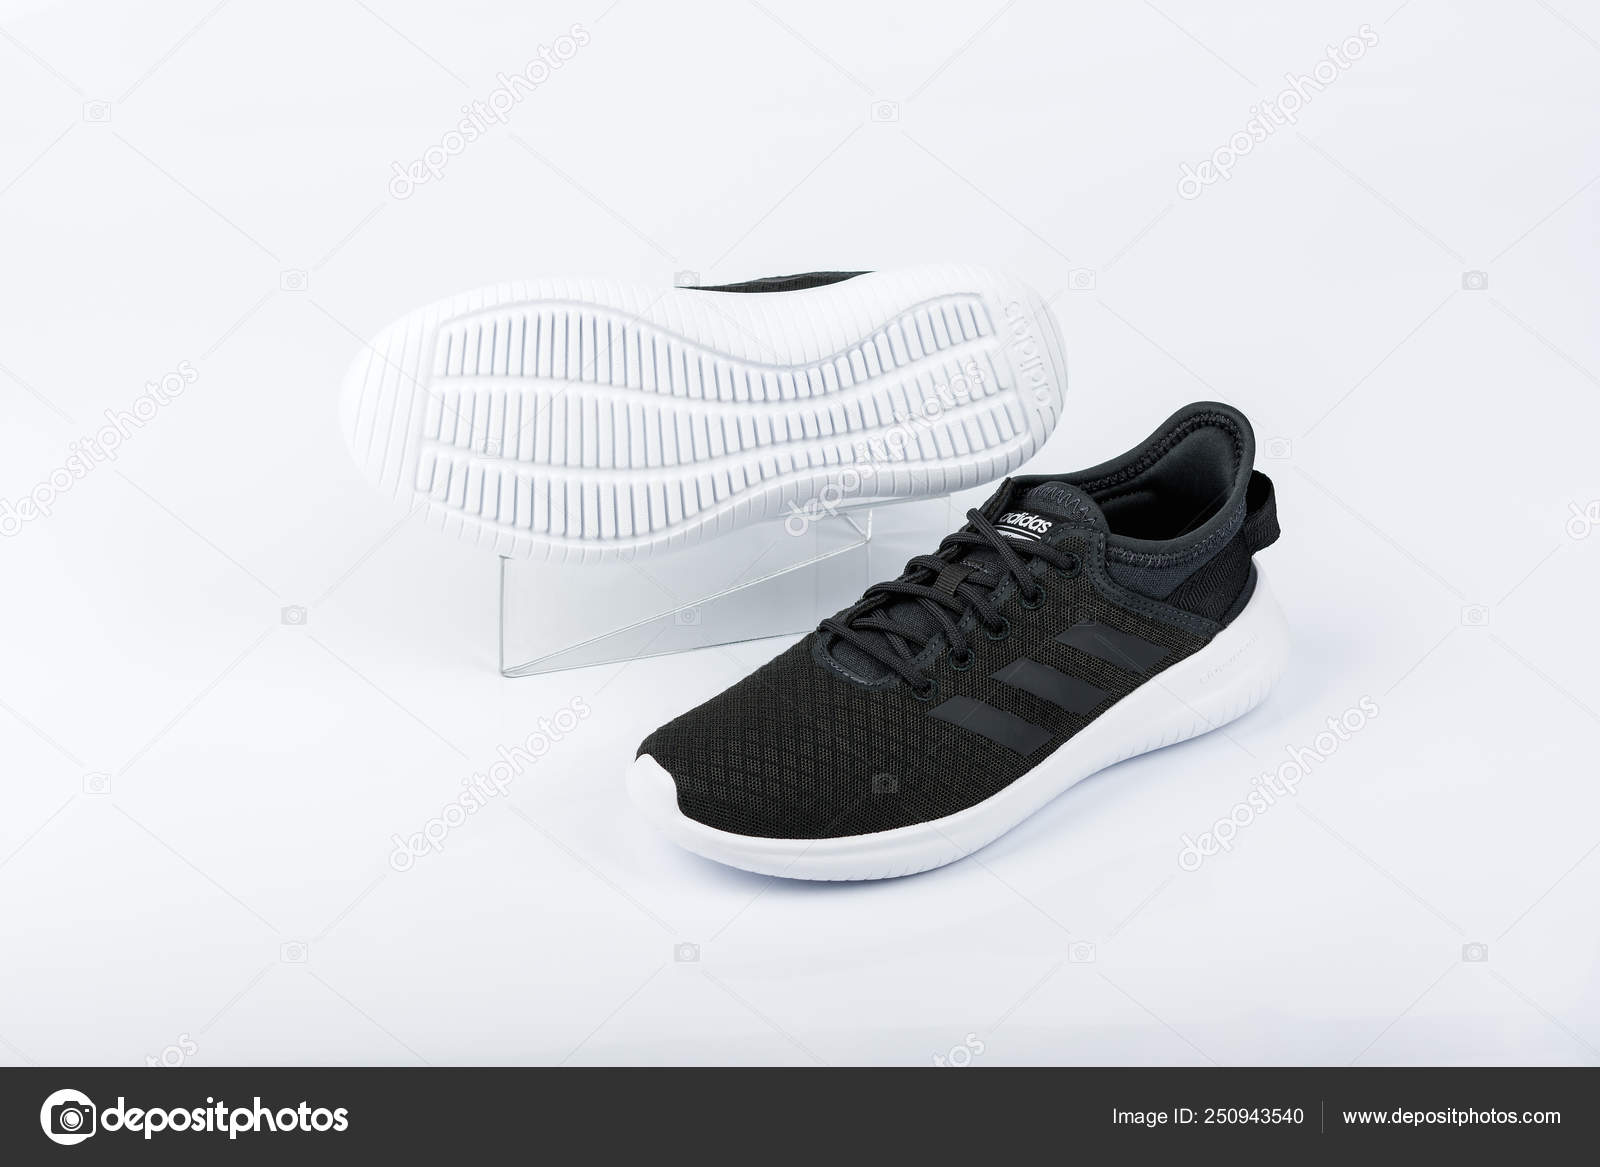 adidas flex shoes